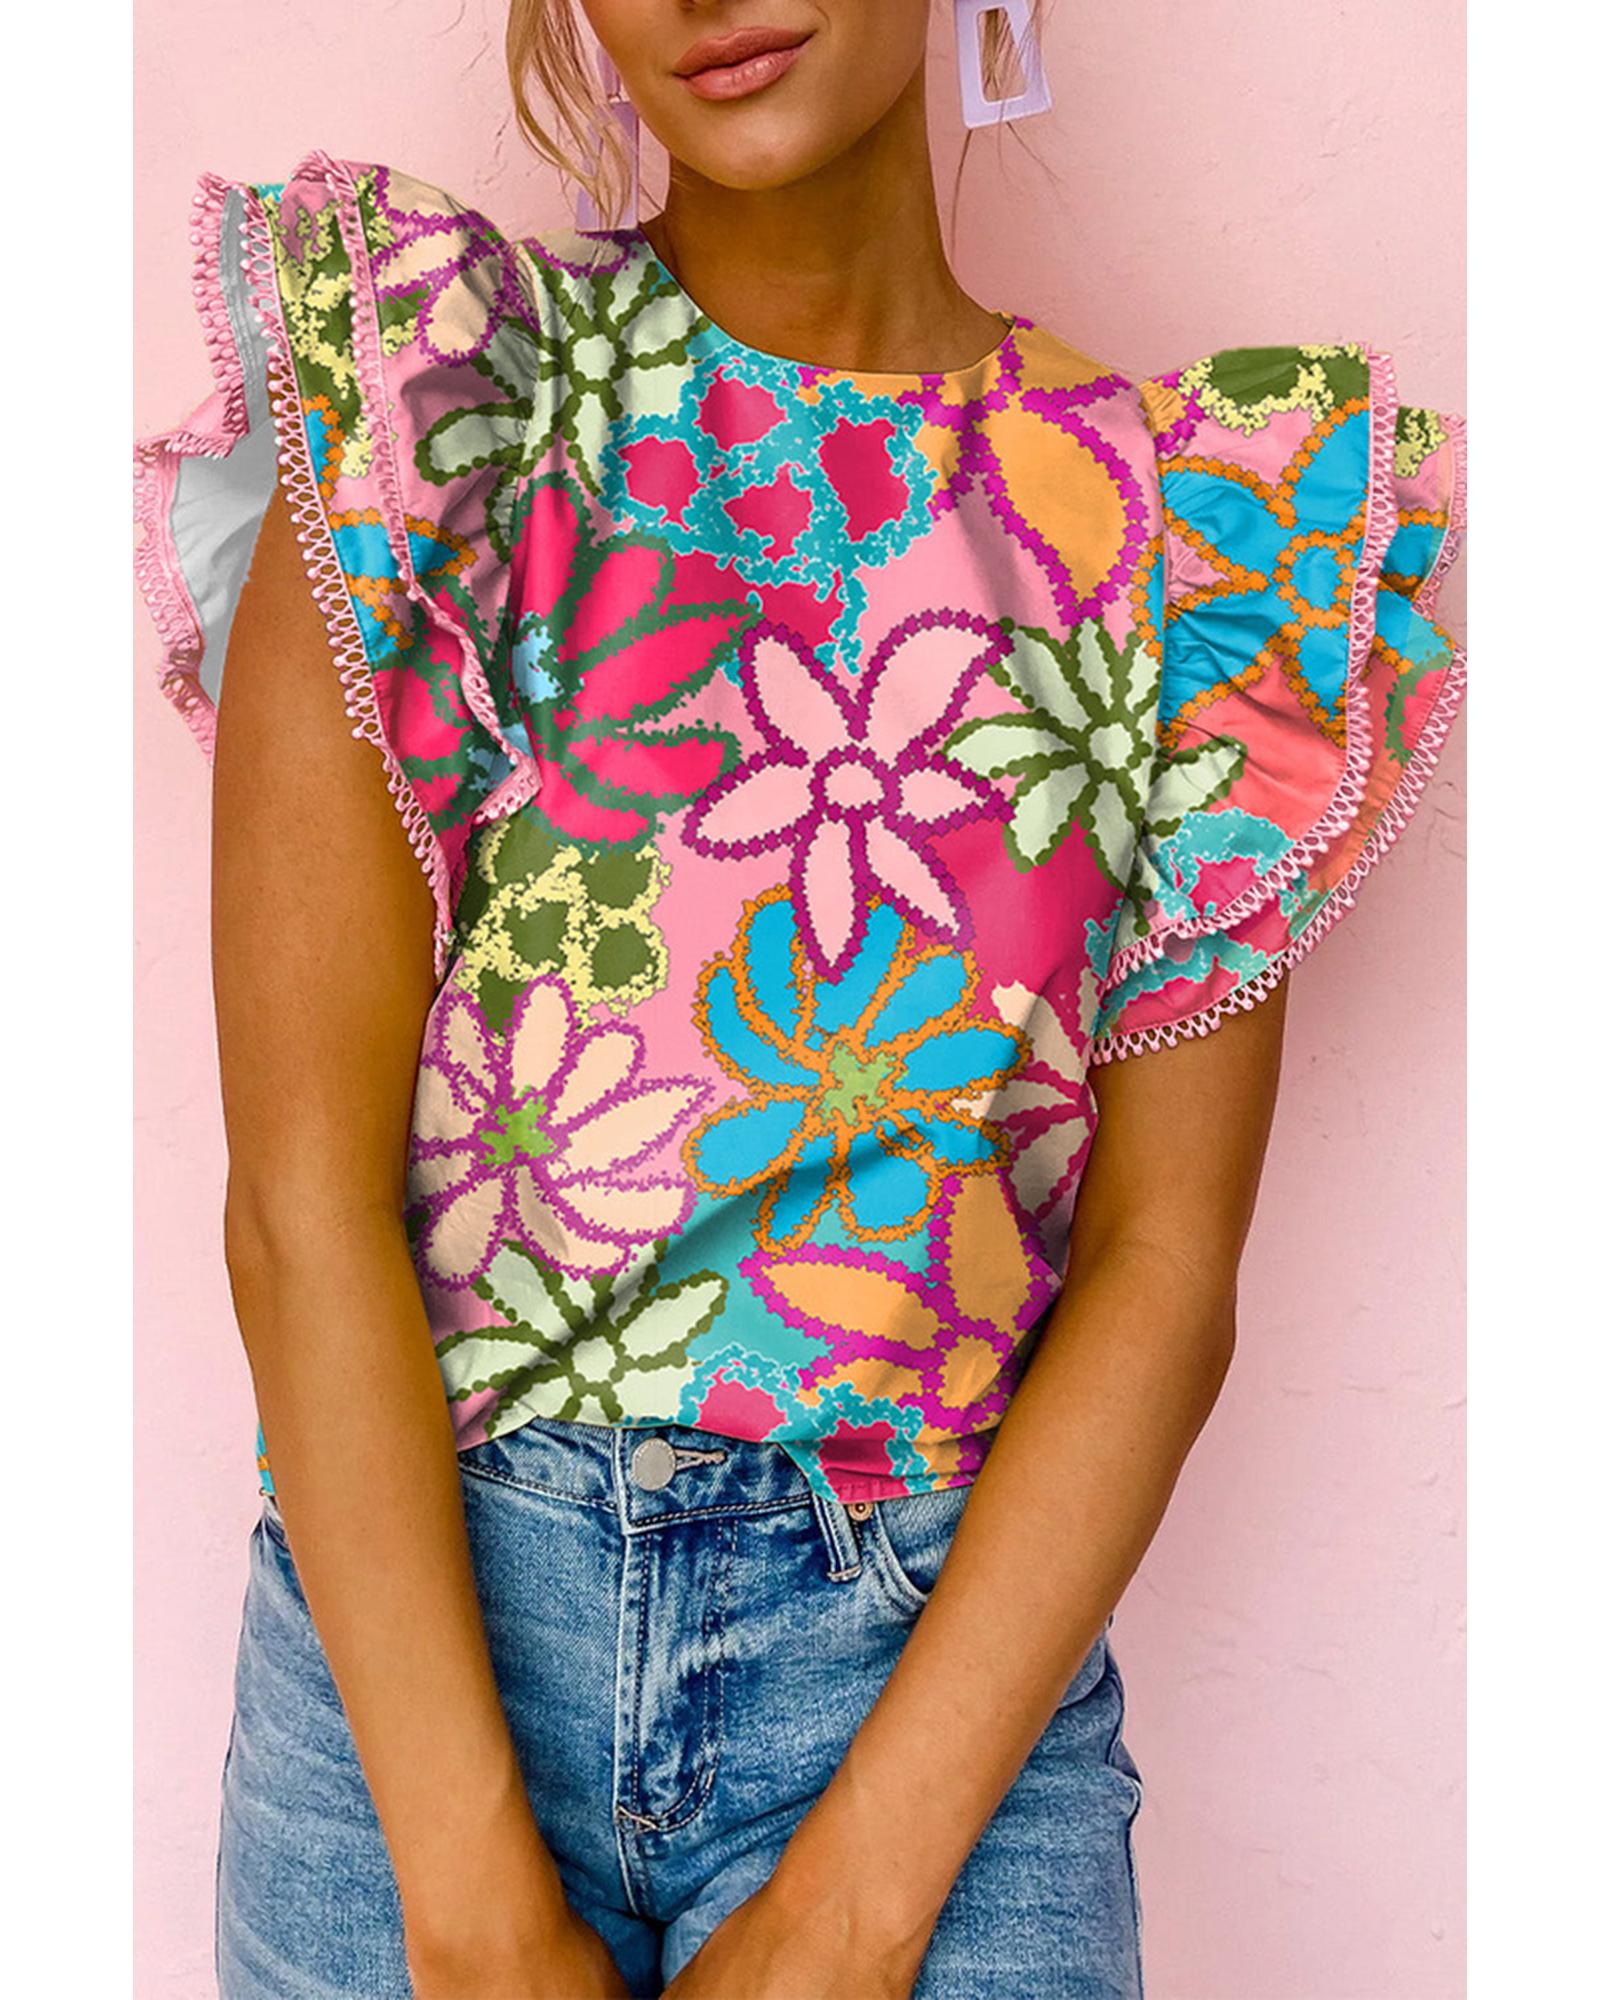 Azura Exchange Vibrant Floral Print Ruffle Sleeve Blouse - M